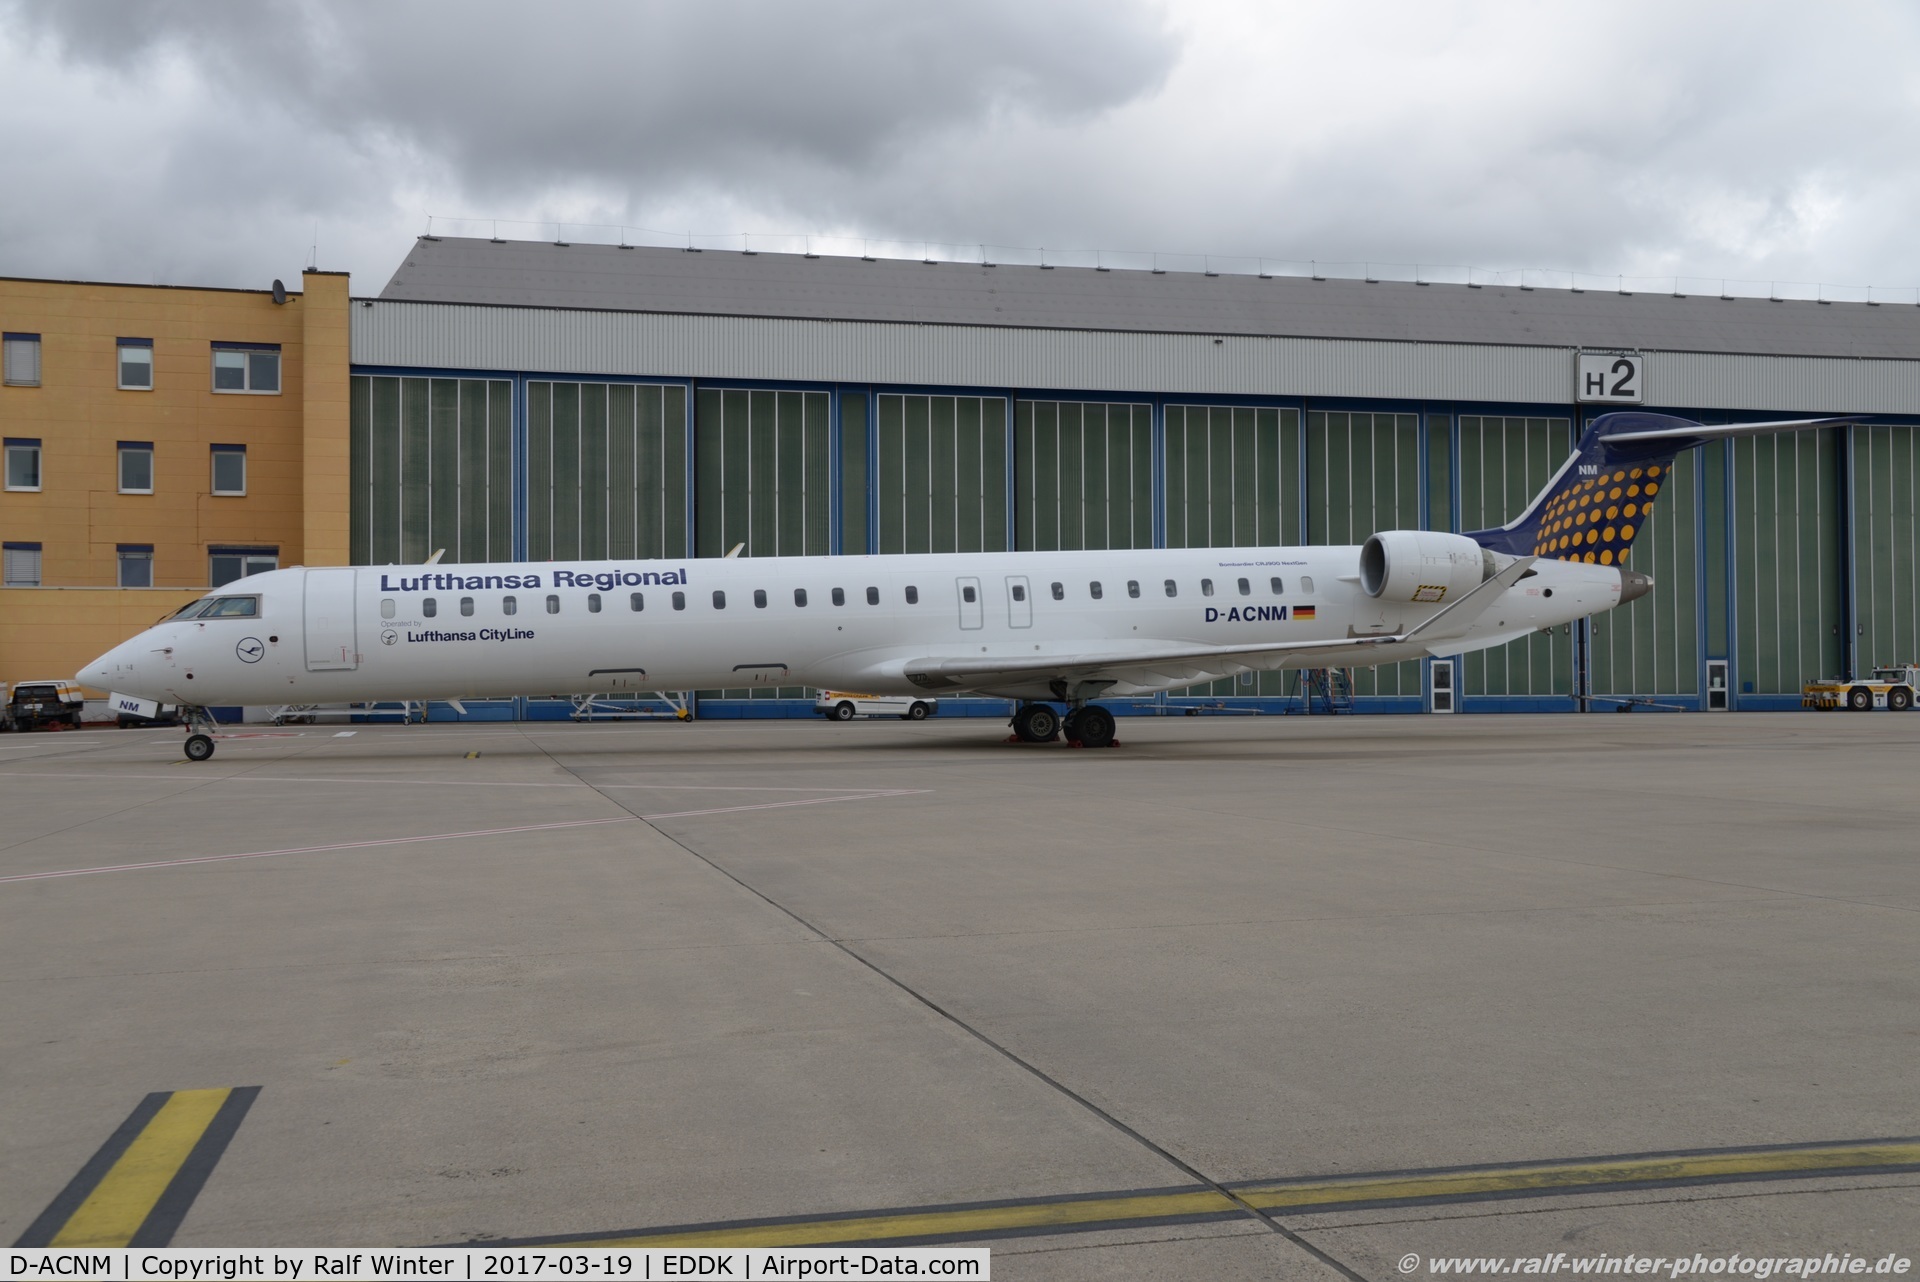 D-ACNM, 2010 Bombardier CRJ-900LR (CL-600-2D24) C/N 15253, Bombardier CL-600-2D24 CRJ-900LR - EW EWG Eurowings op Lufthansa Regional - 15253 - D-ACNM - 19.03.2017 - CGN